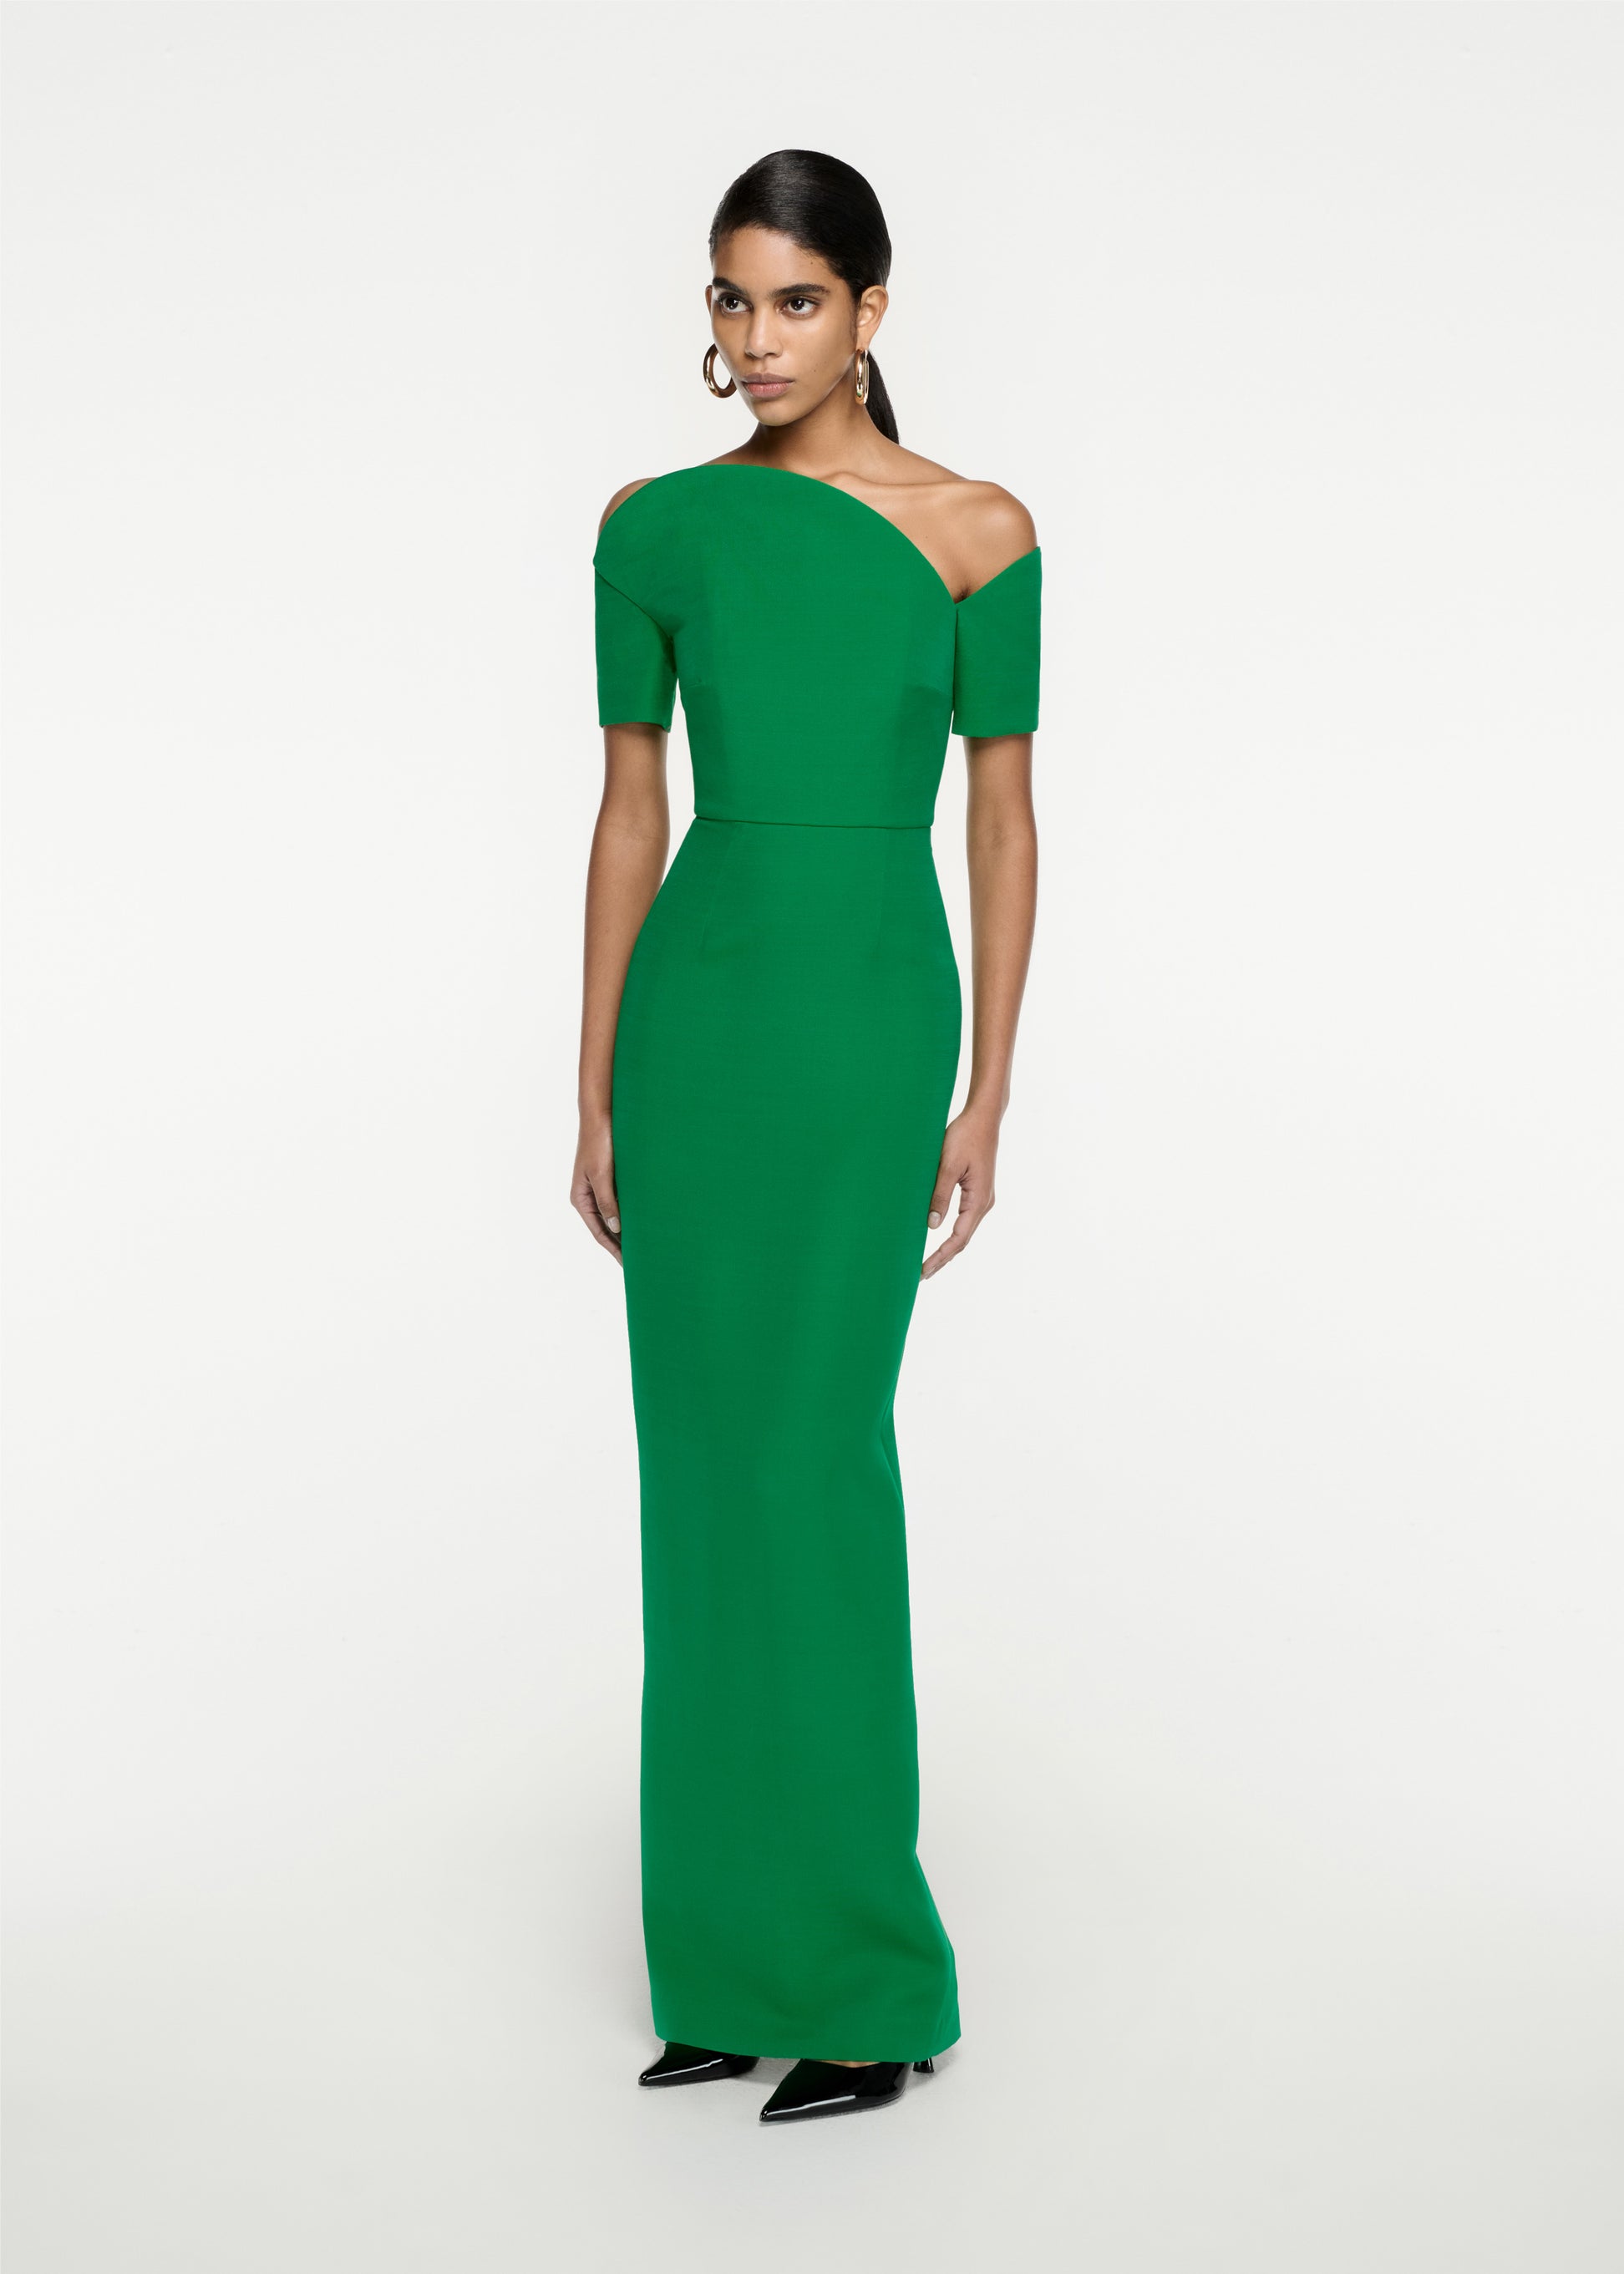 Woman wearing the Asymmetric Silk Wool Maxi Dress in Green